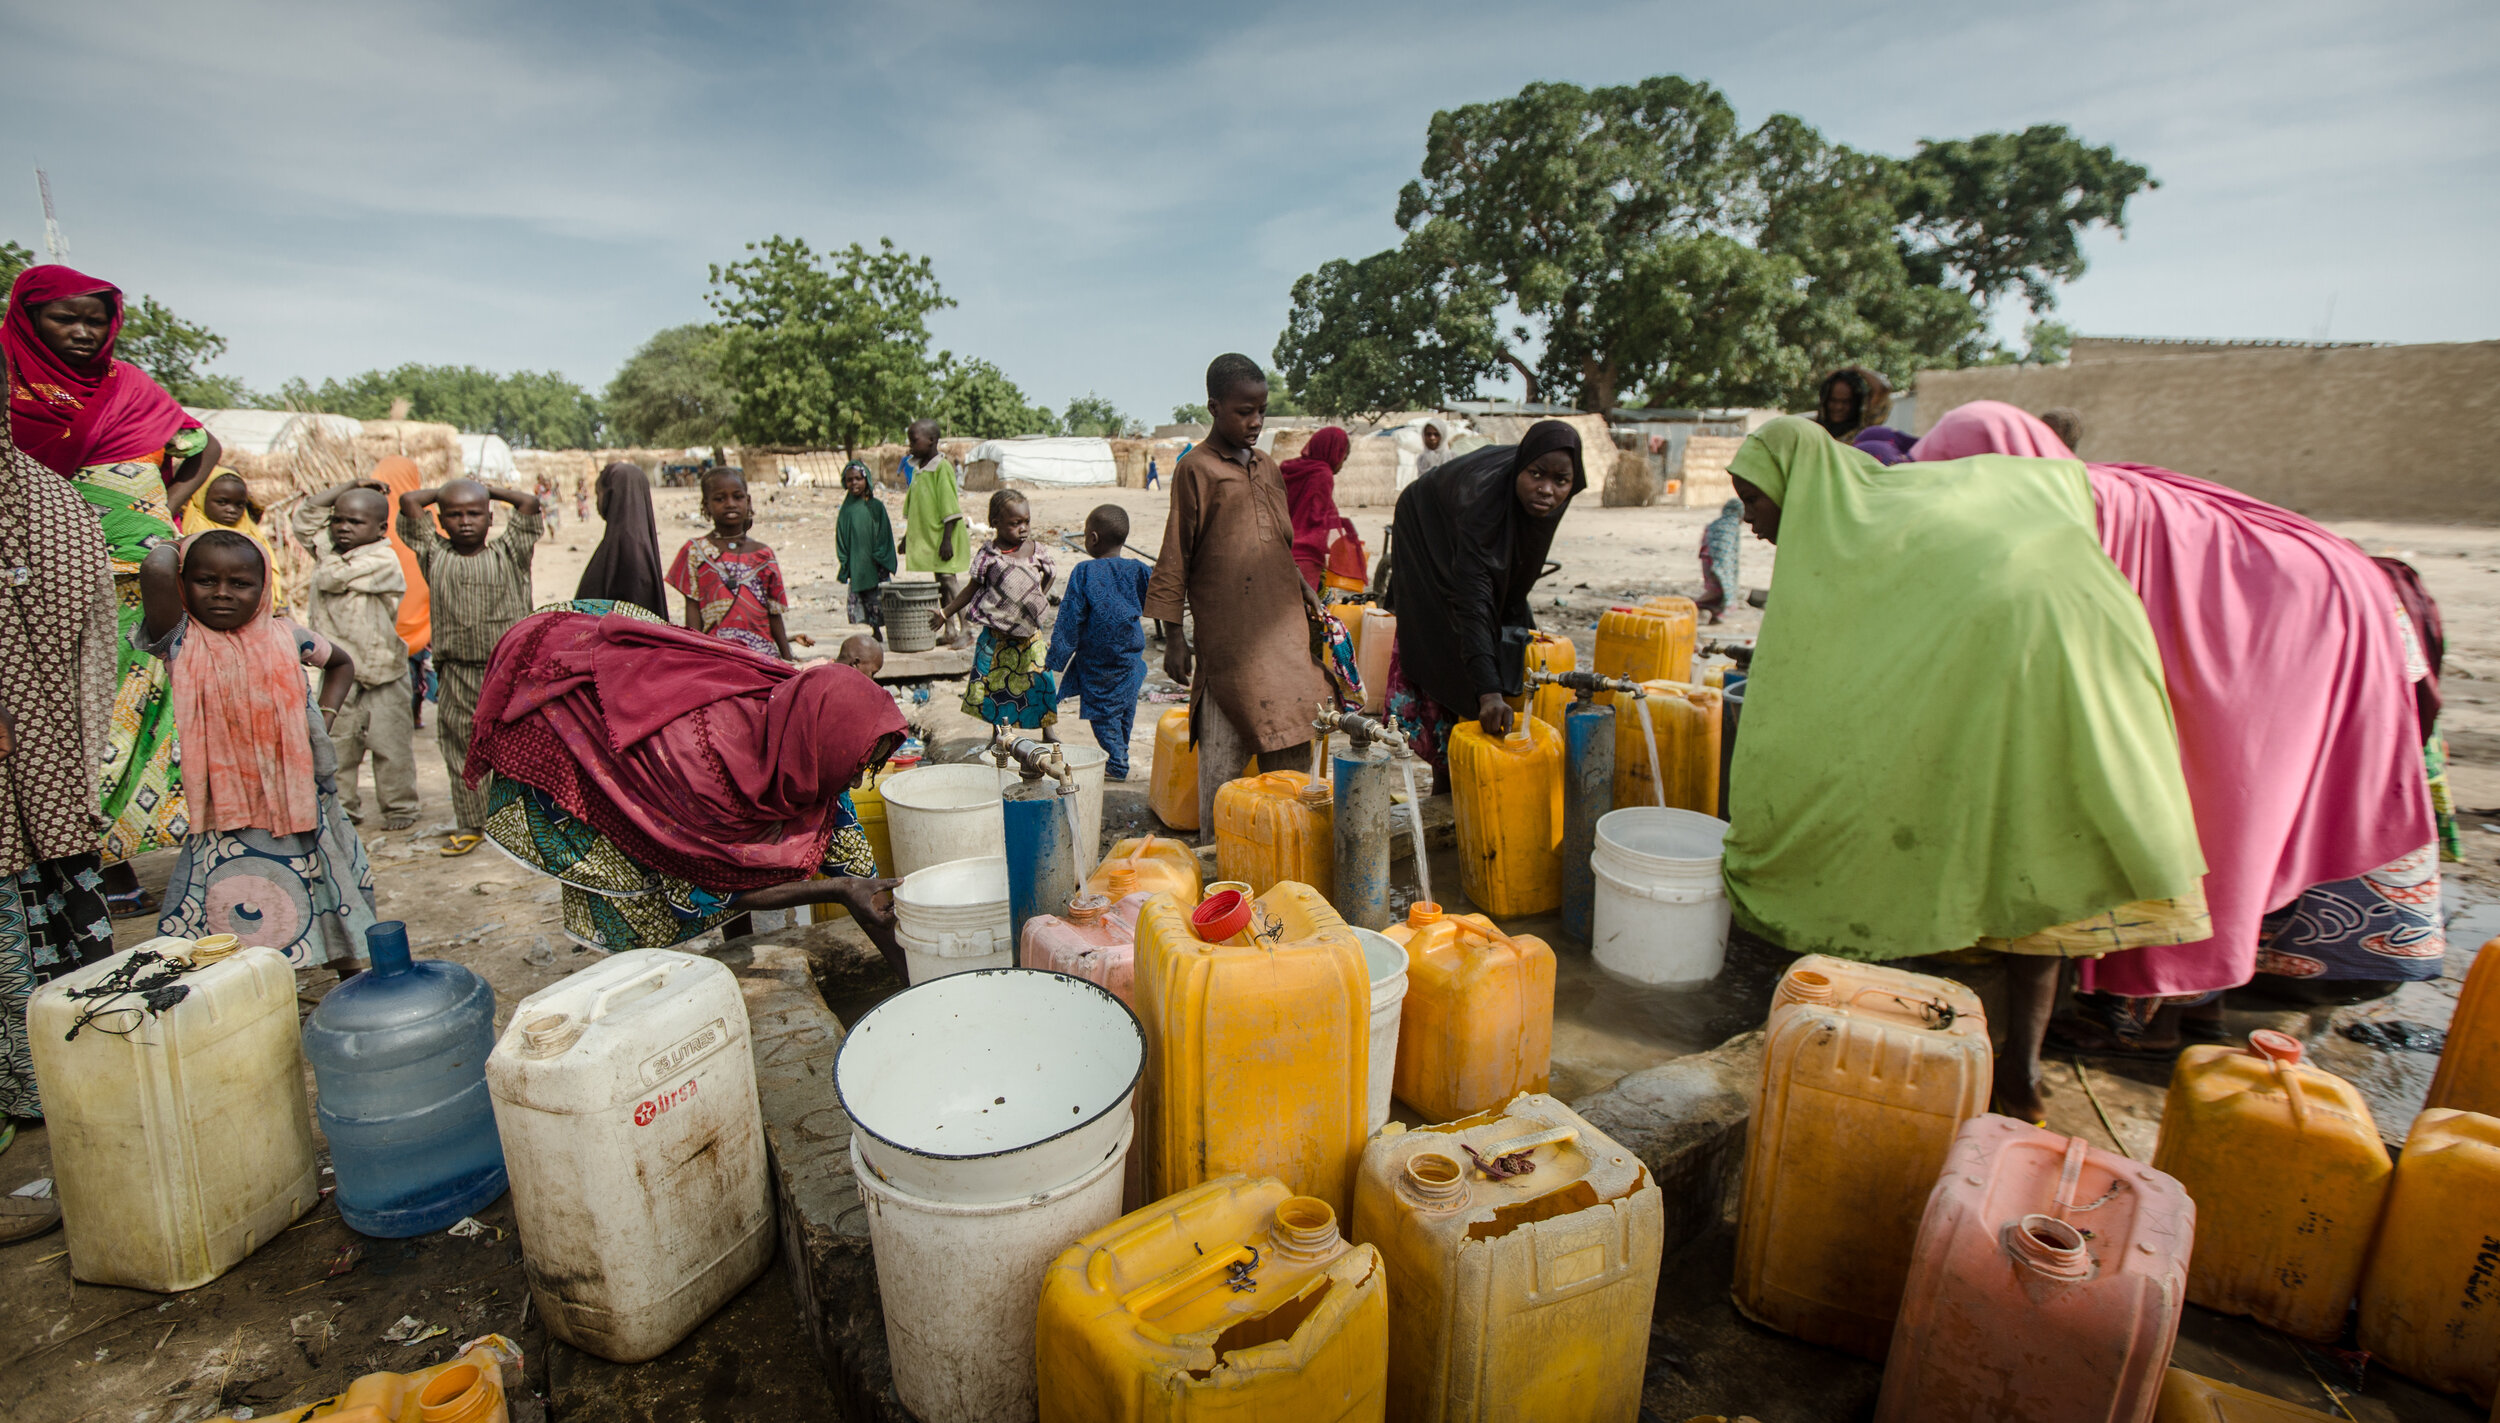  the daily morning water collection. Dalti IDP camp, Maiduguri, northeastern Nigeria. November 2018 